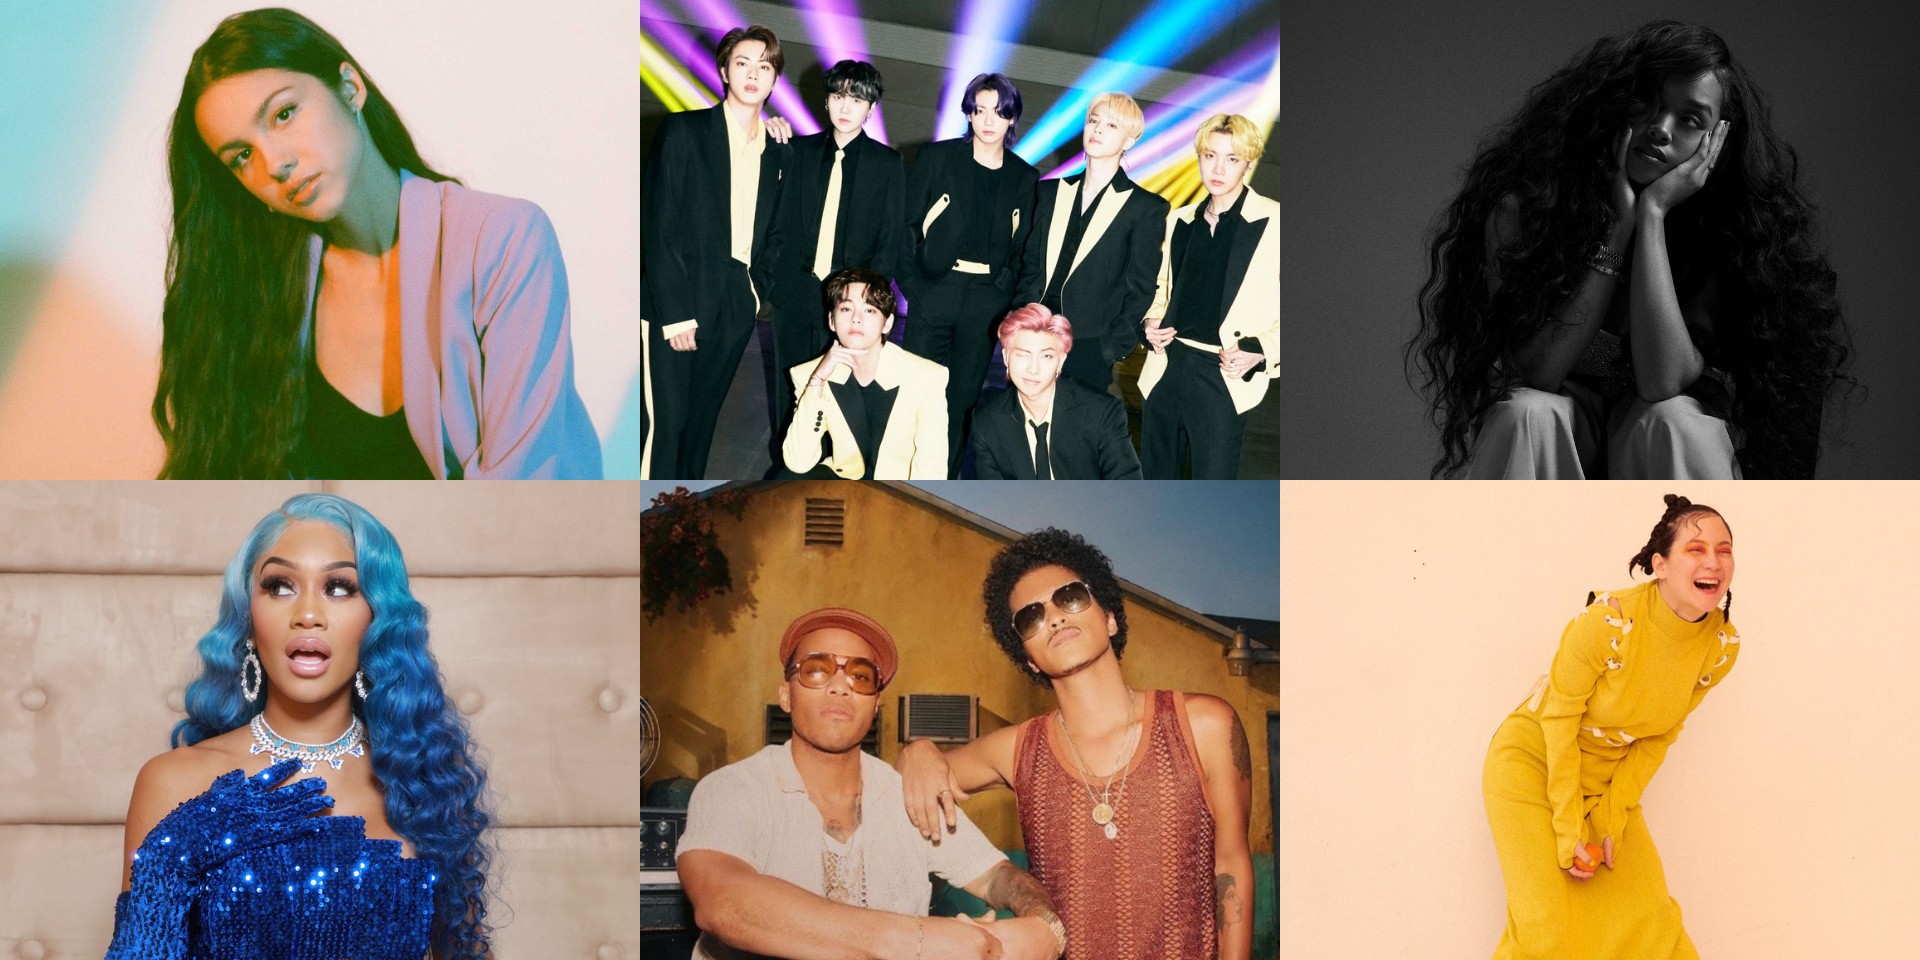 First Round Of 2022 GRAMMYs Performers Announced: BTS, Olivia Rodrigo,  Billie Eilish, Lil Nas X, Jack Harlow, Brandi Carlile & Brothers Osborne